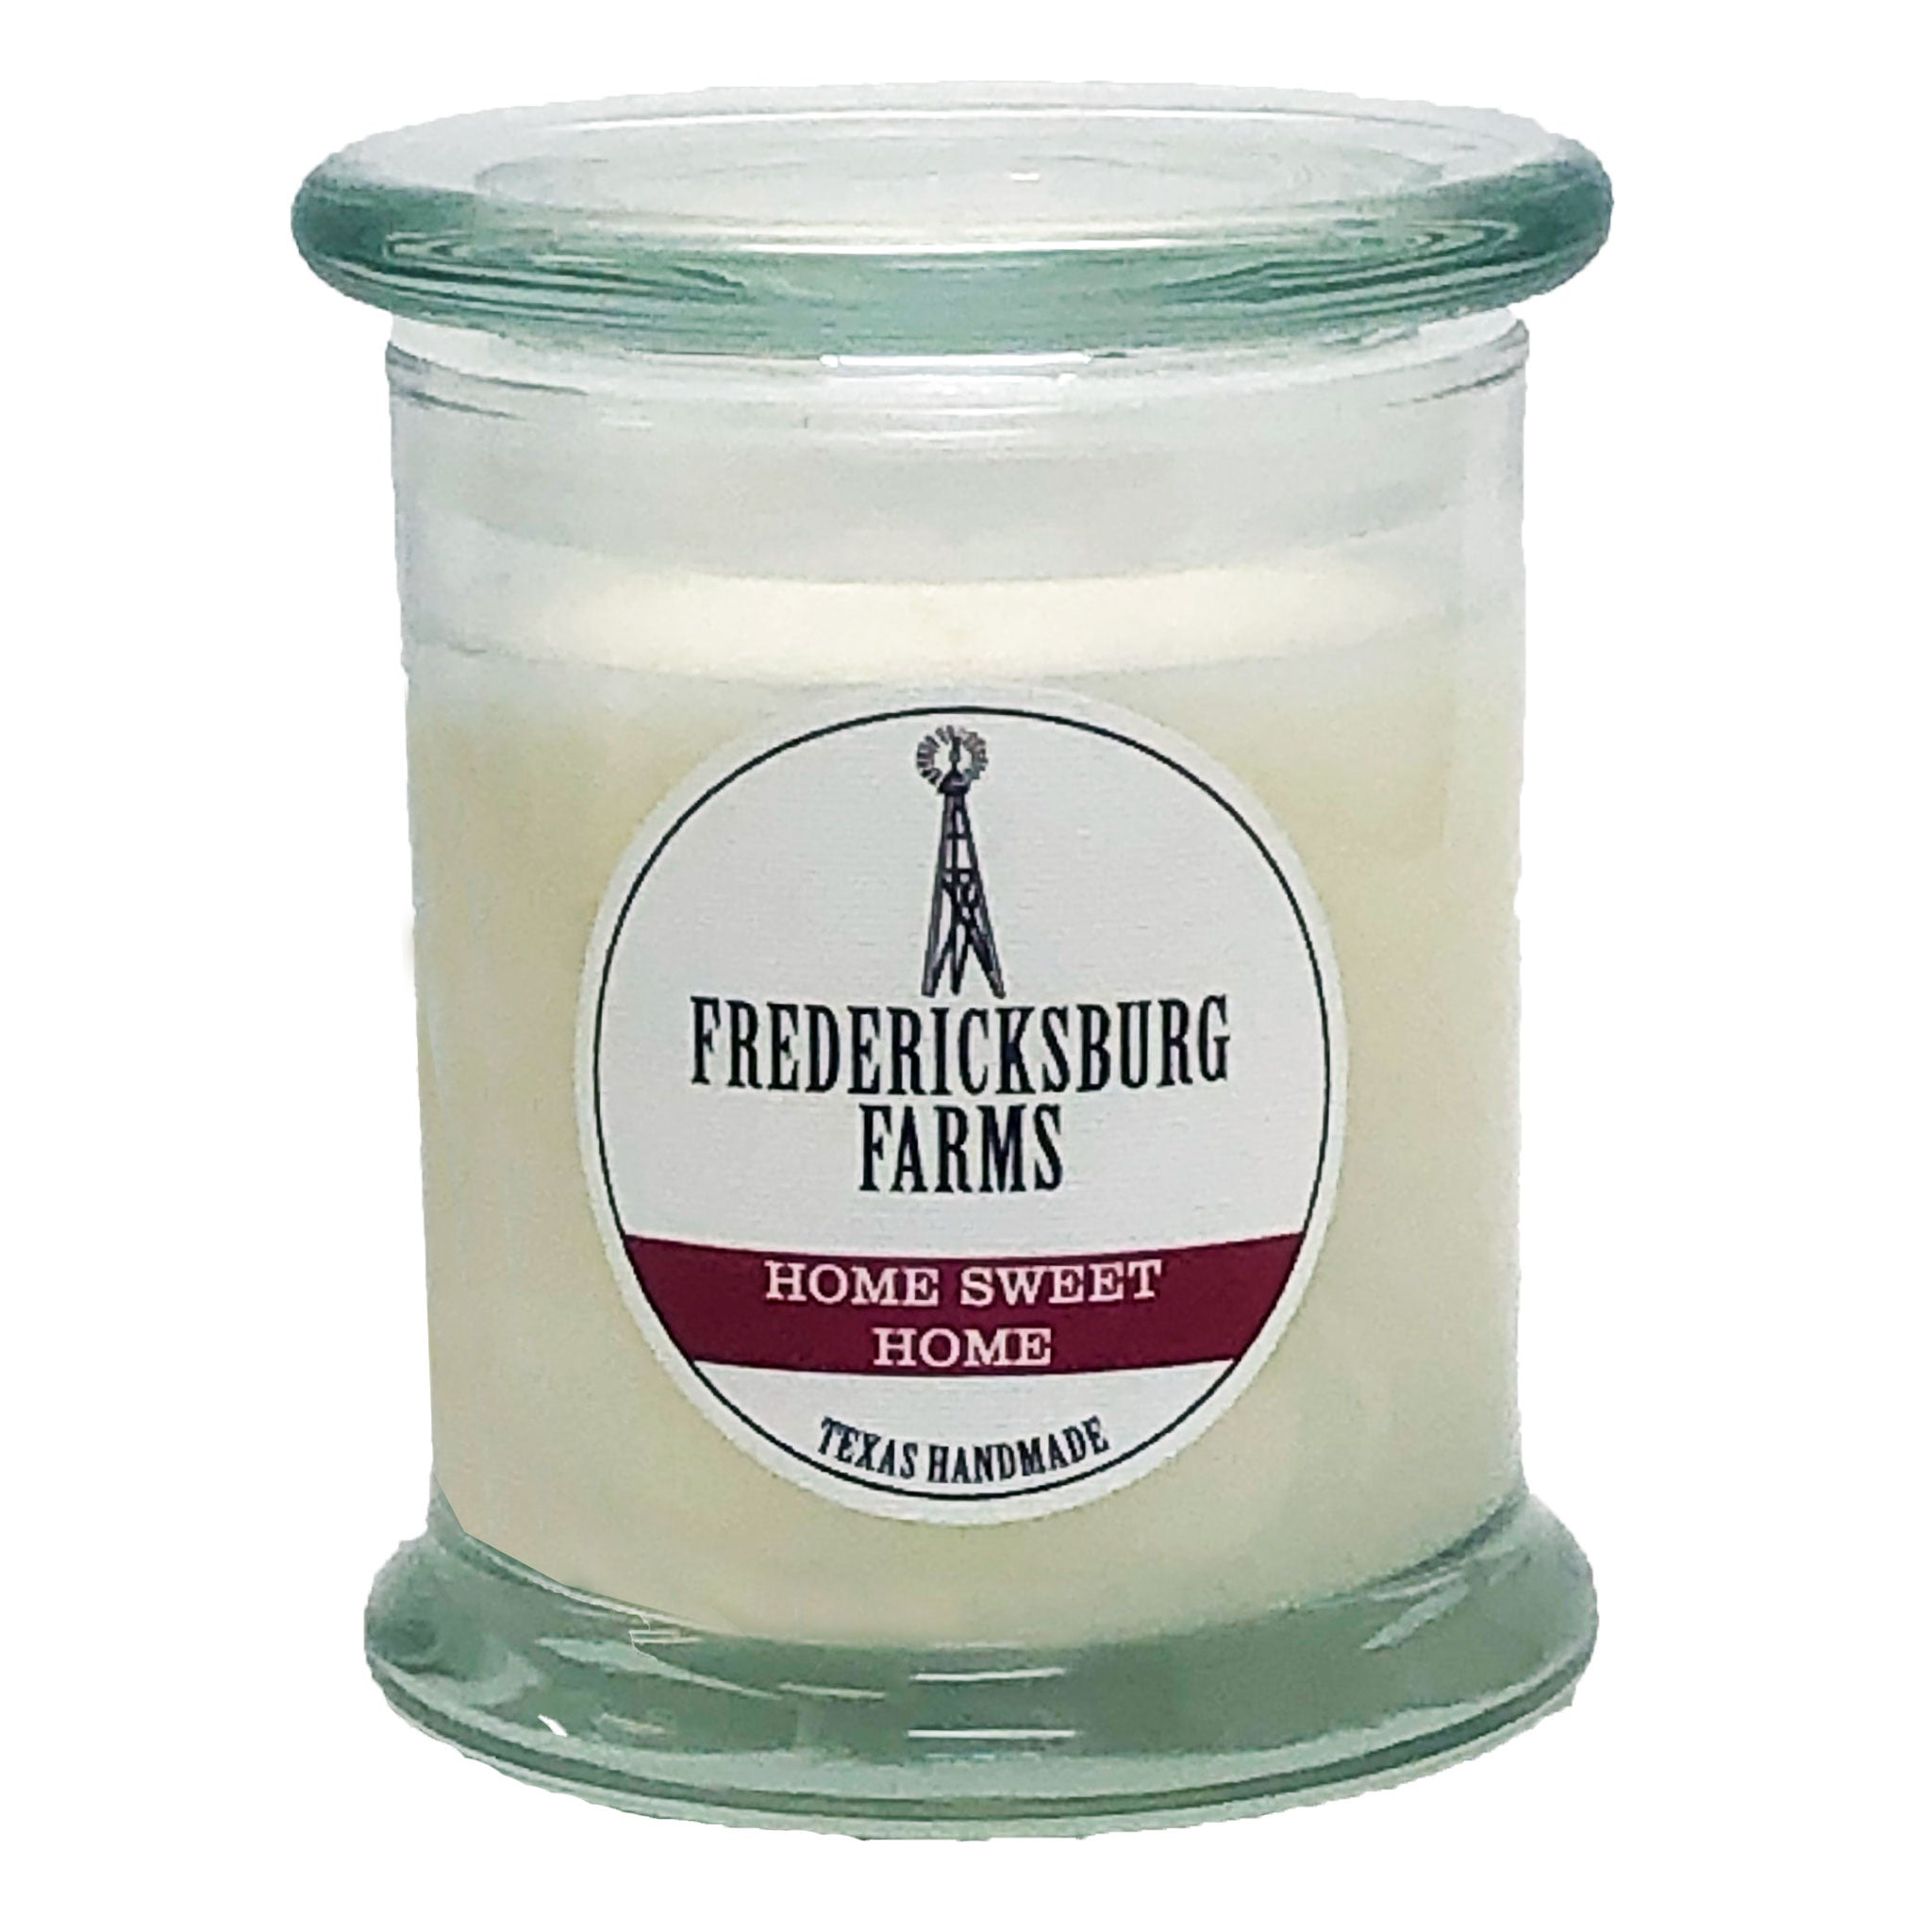 Home Sweet Home Candle (9 oz.) - Fredericksburg Farms